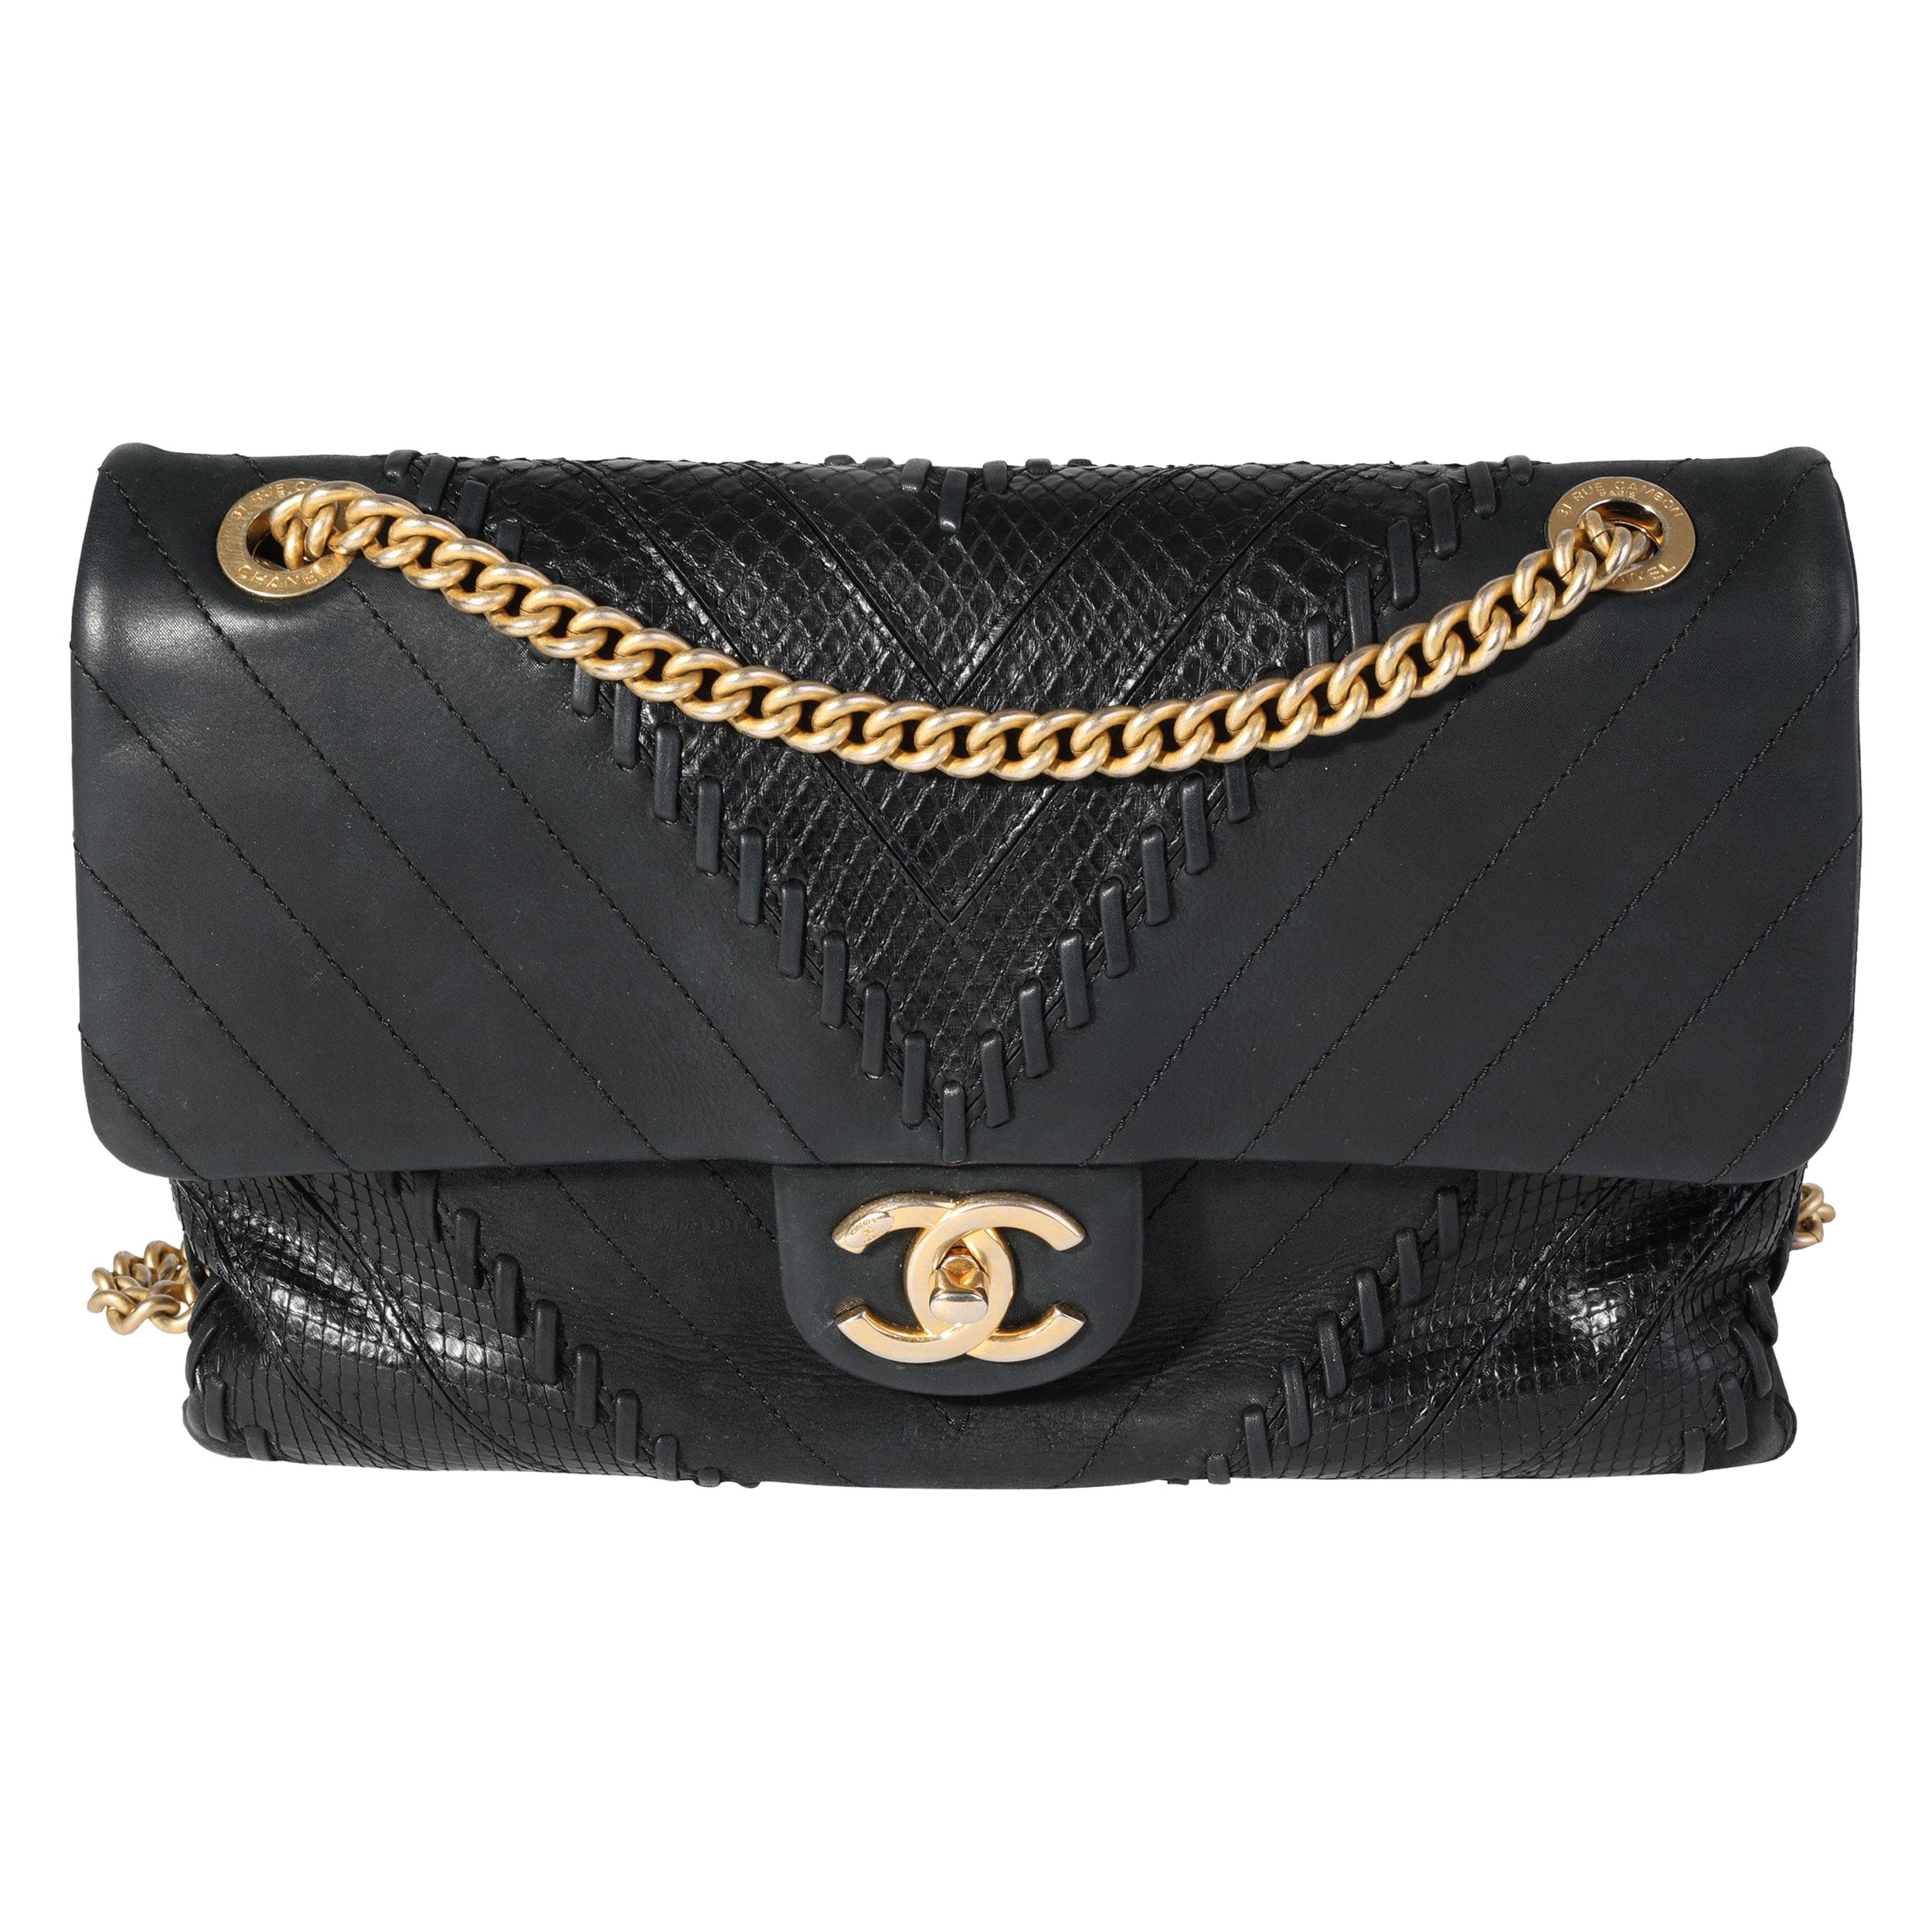 Chanel Black Chevron & Python Patchwork Flap Bag